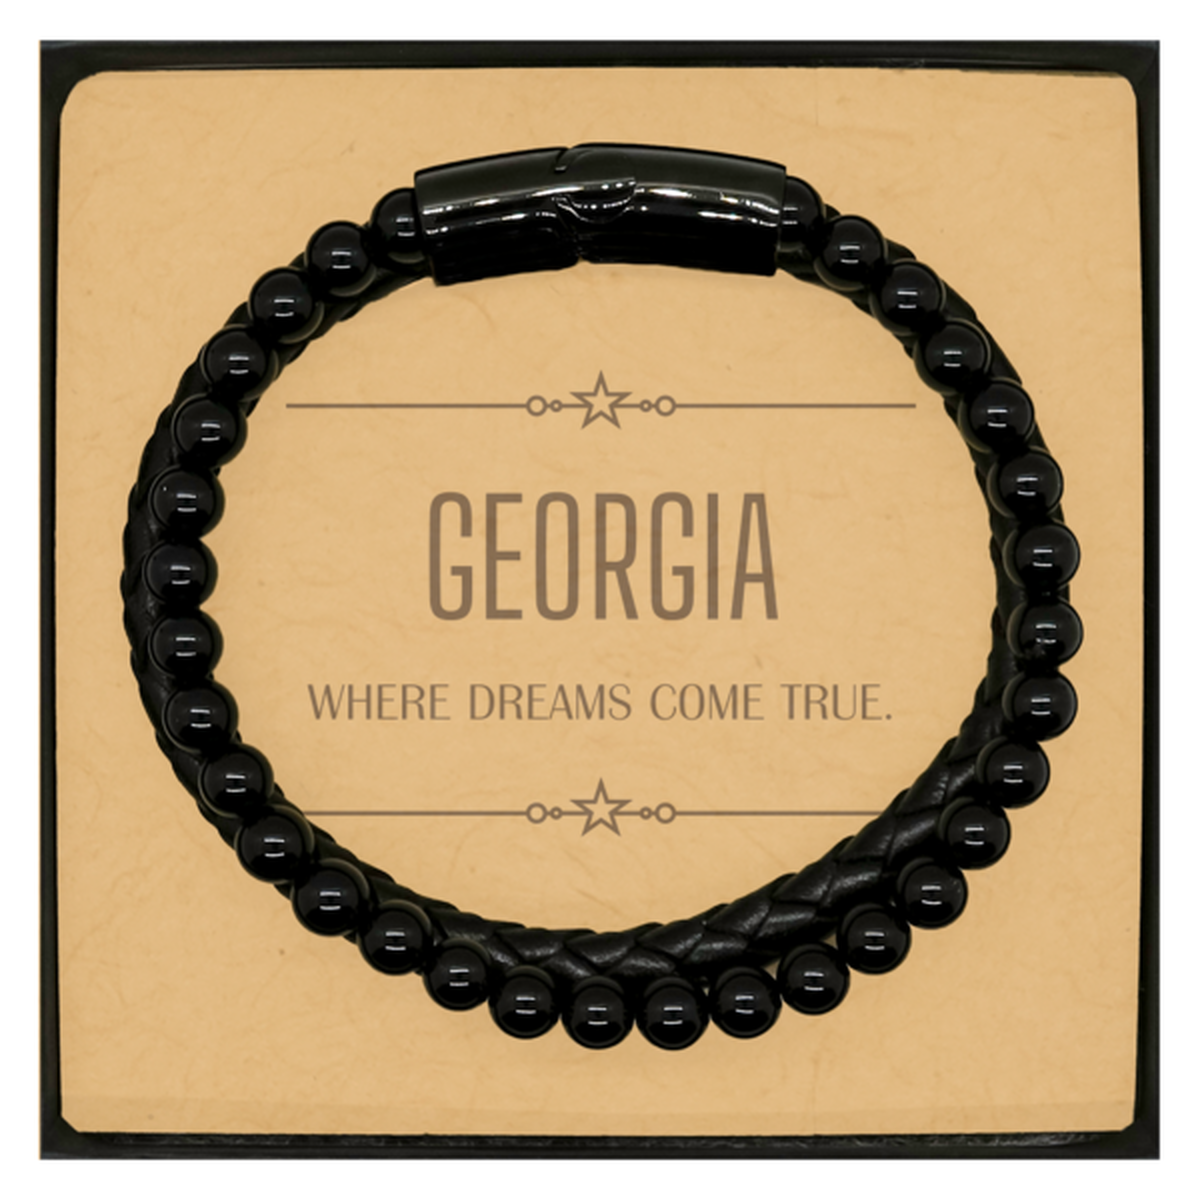 Love Georgia State Stone Leather Bracelets, Georgia Where dreams come true, Birthday Christmas Inspirational Gifts For Georgia Men, Women, Friends